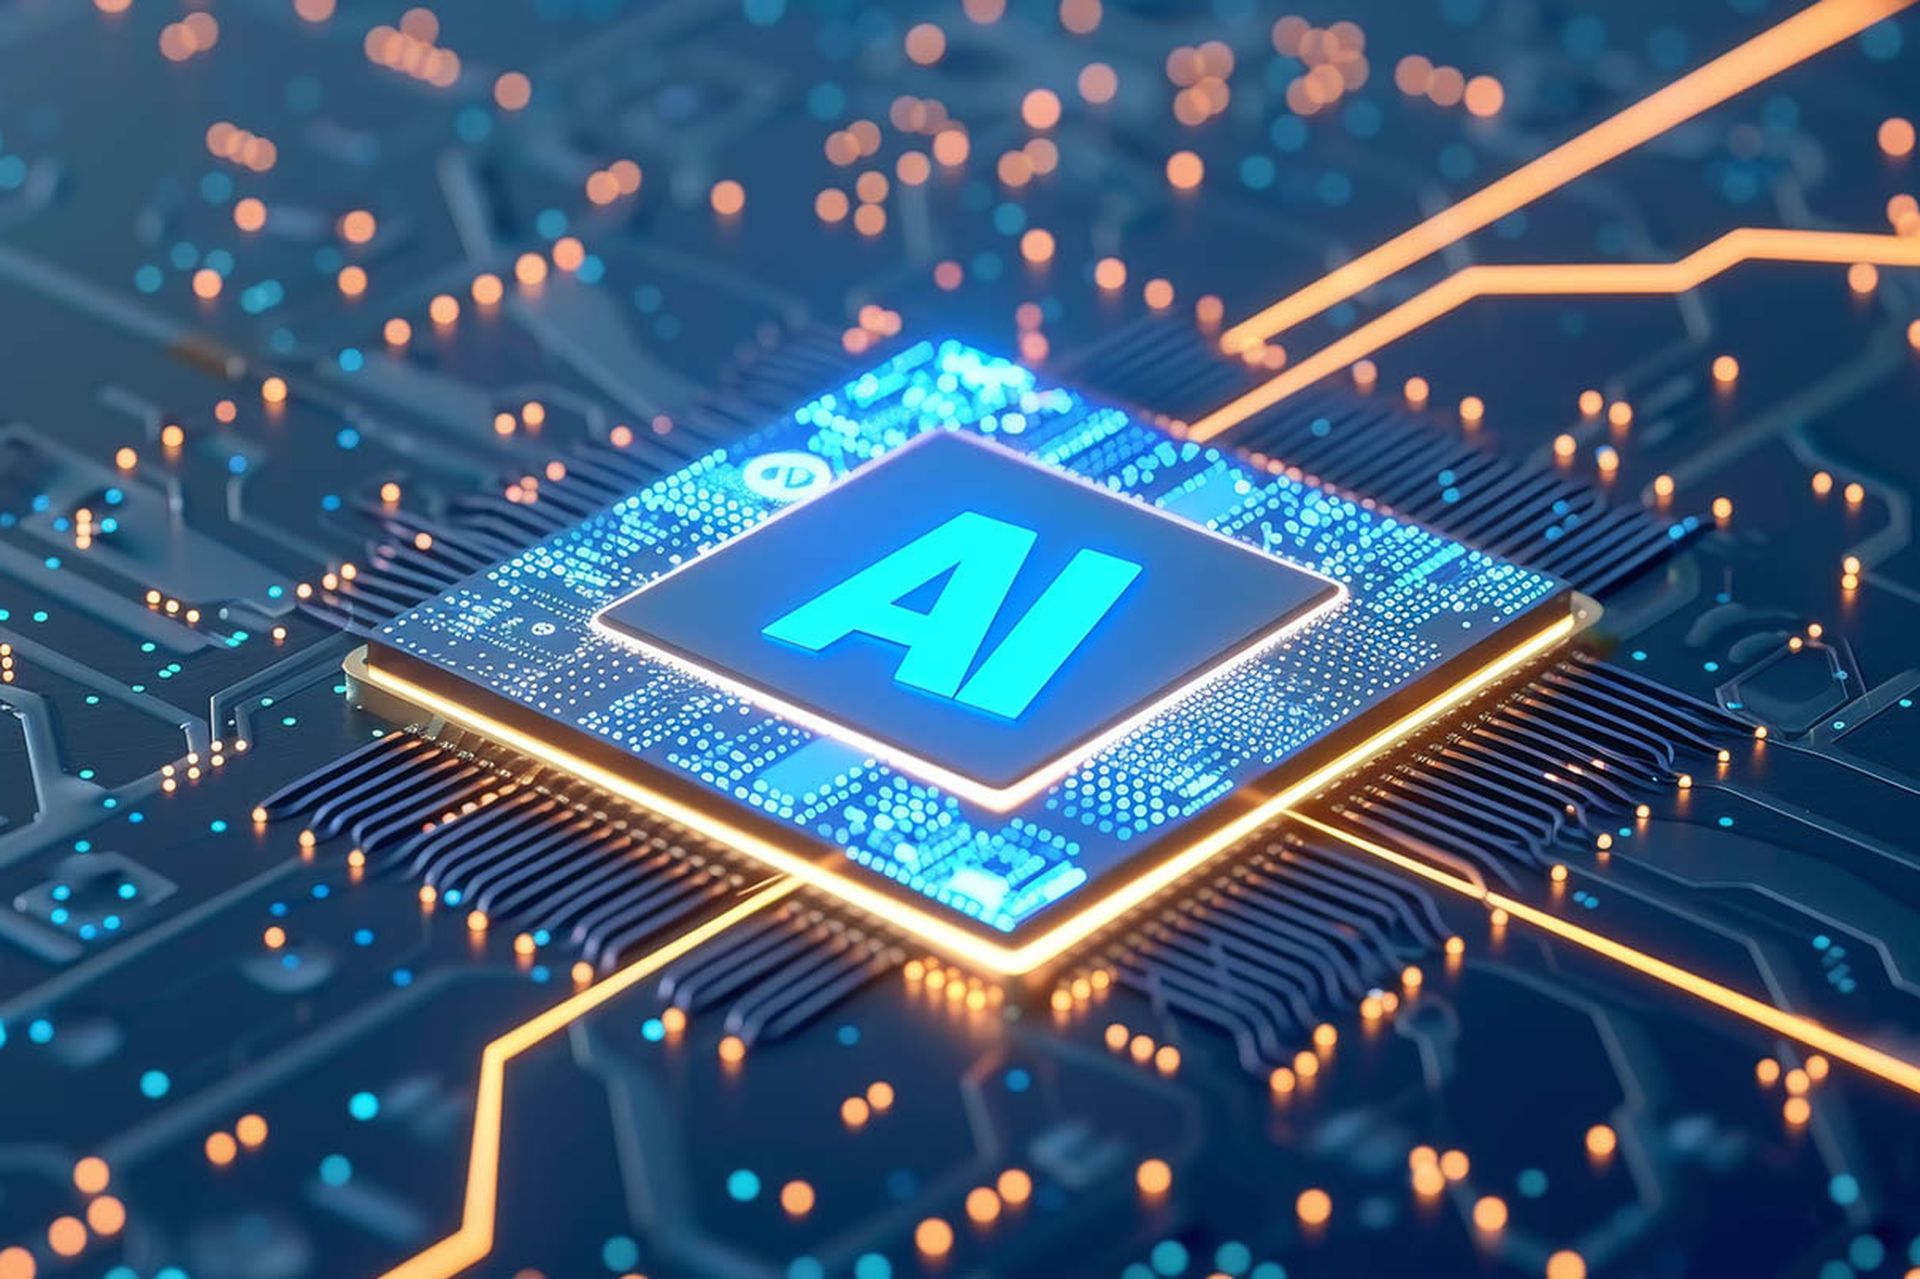 Brain "AI" inside the chip logo representing ai tech.